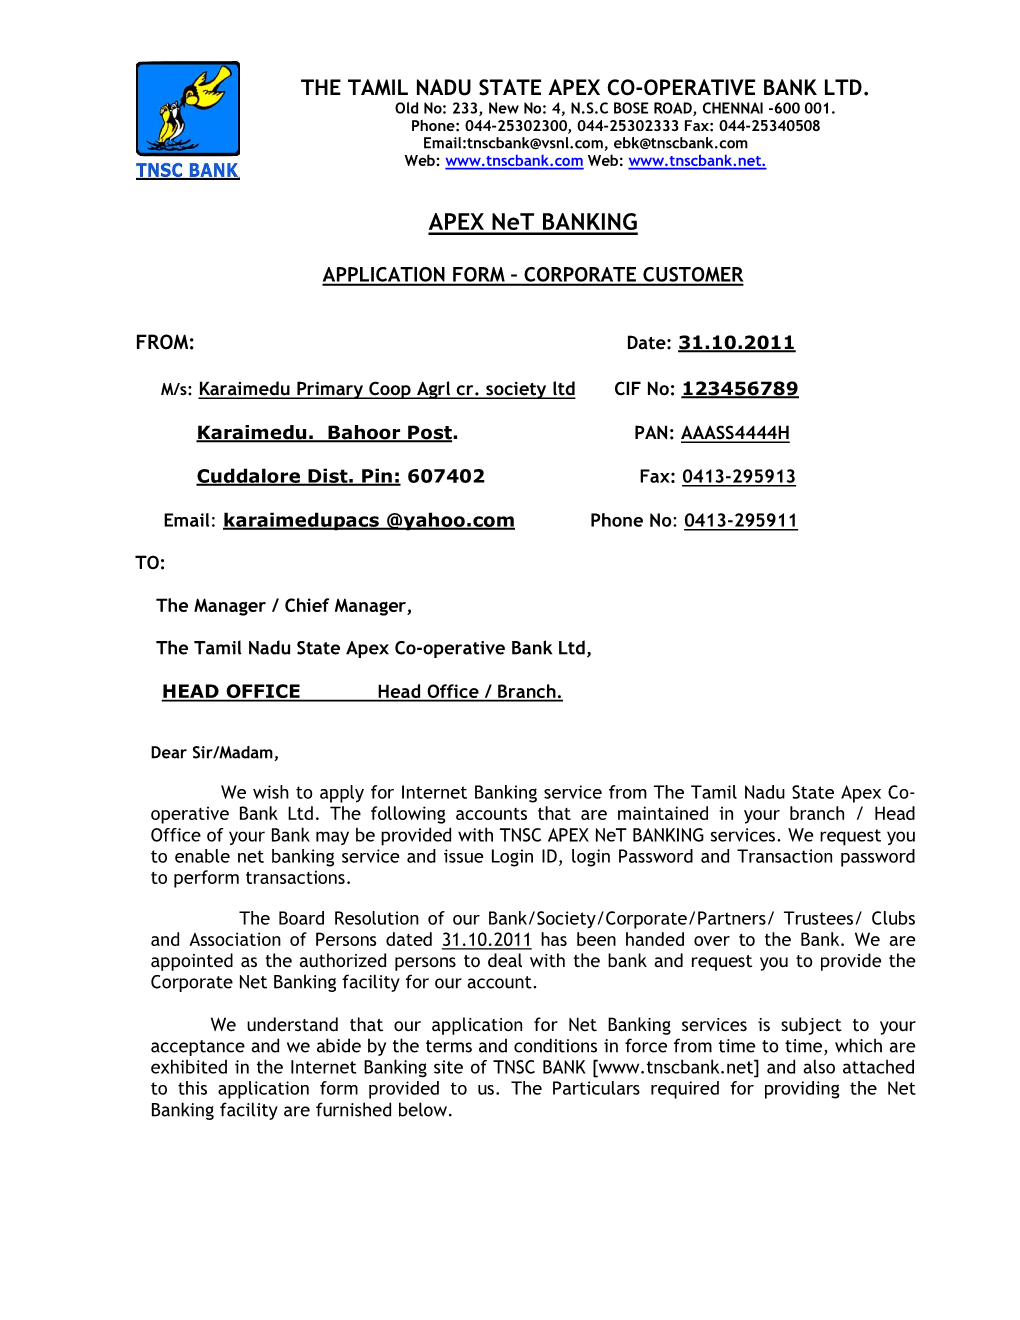 THE TAMIL NADU STATE APEX CO-OPERATIVE BANK LTD. Old No: 233, New No: 4, N.S.C BOSE ROAD, CHENNAI -600 001